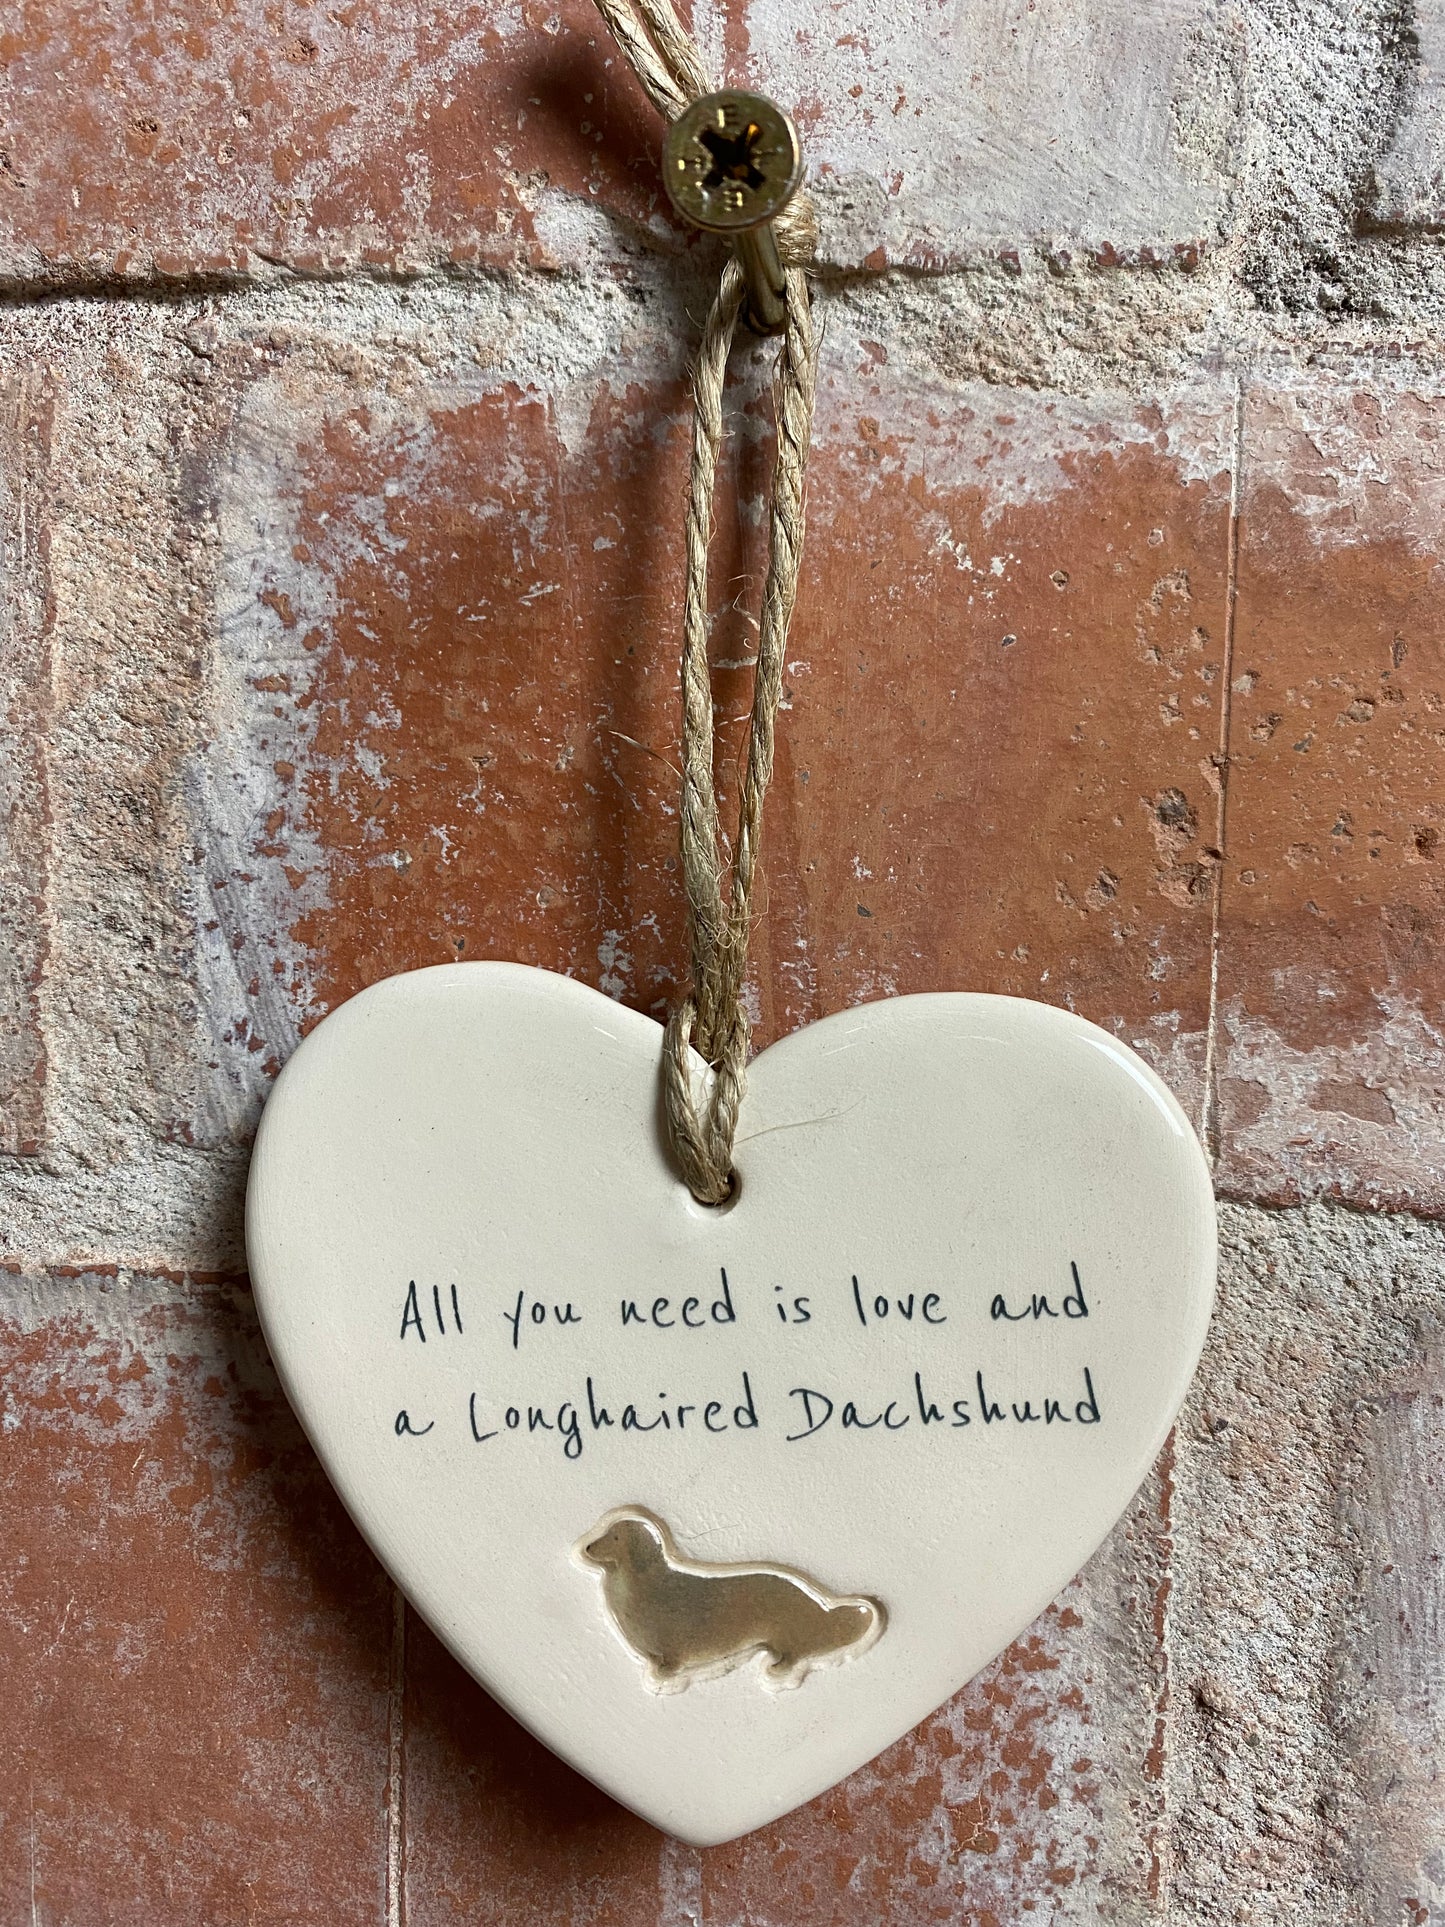 Longhaired Dachshund ceramic heart